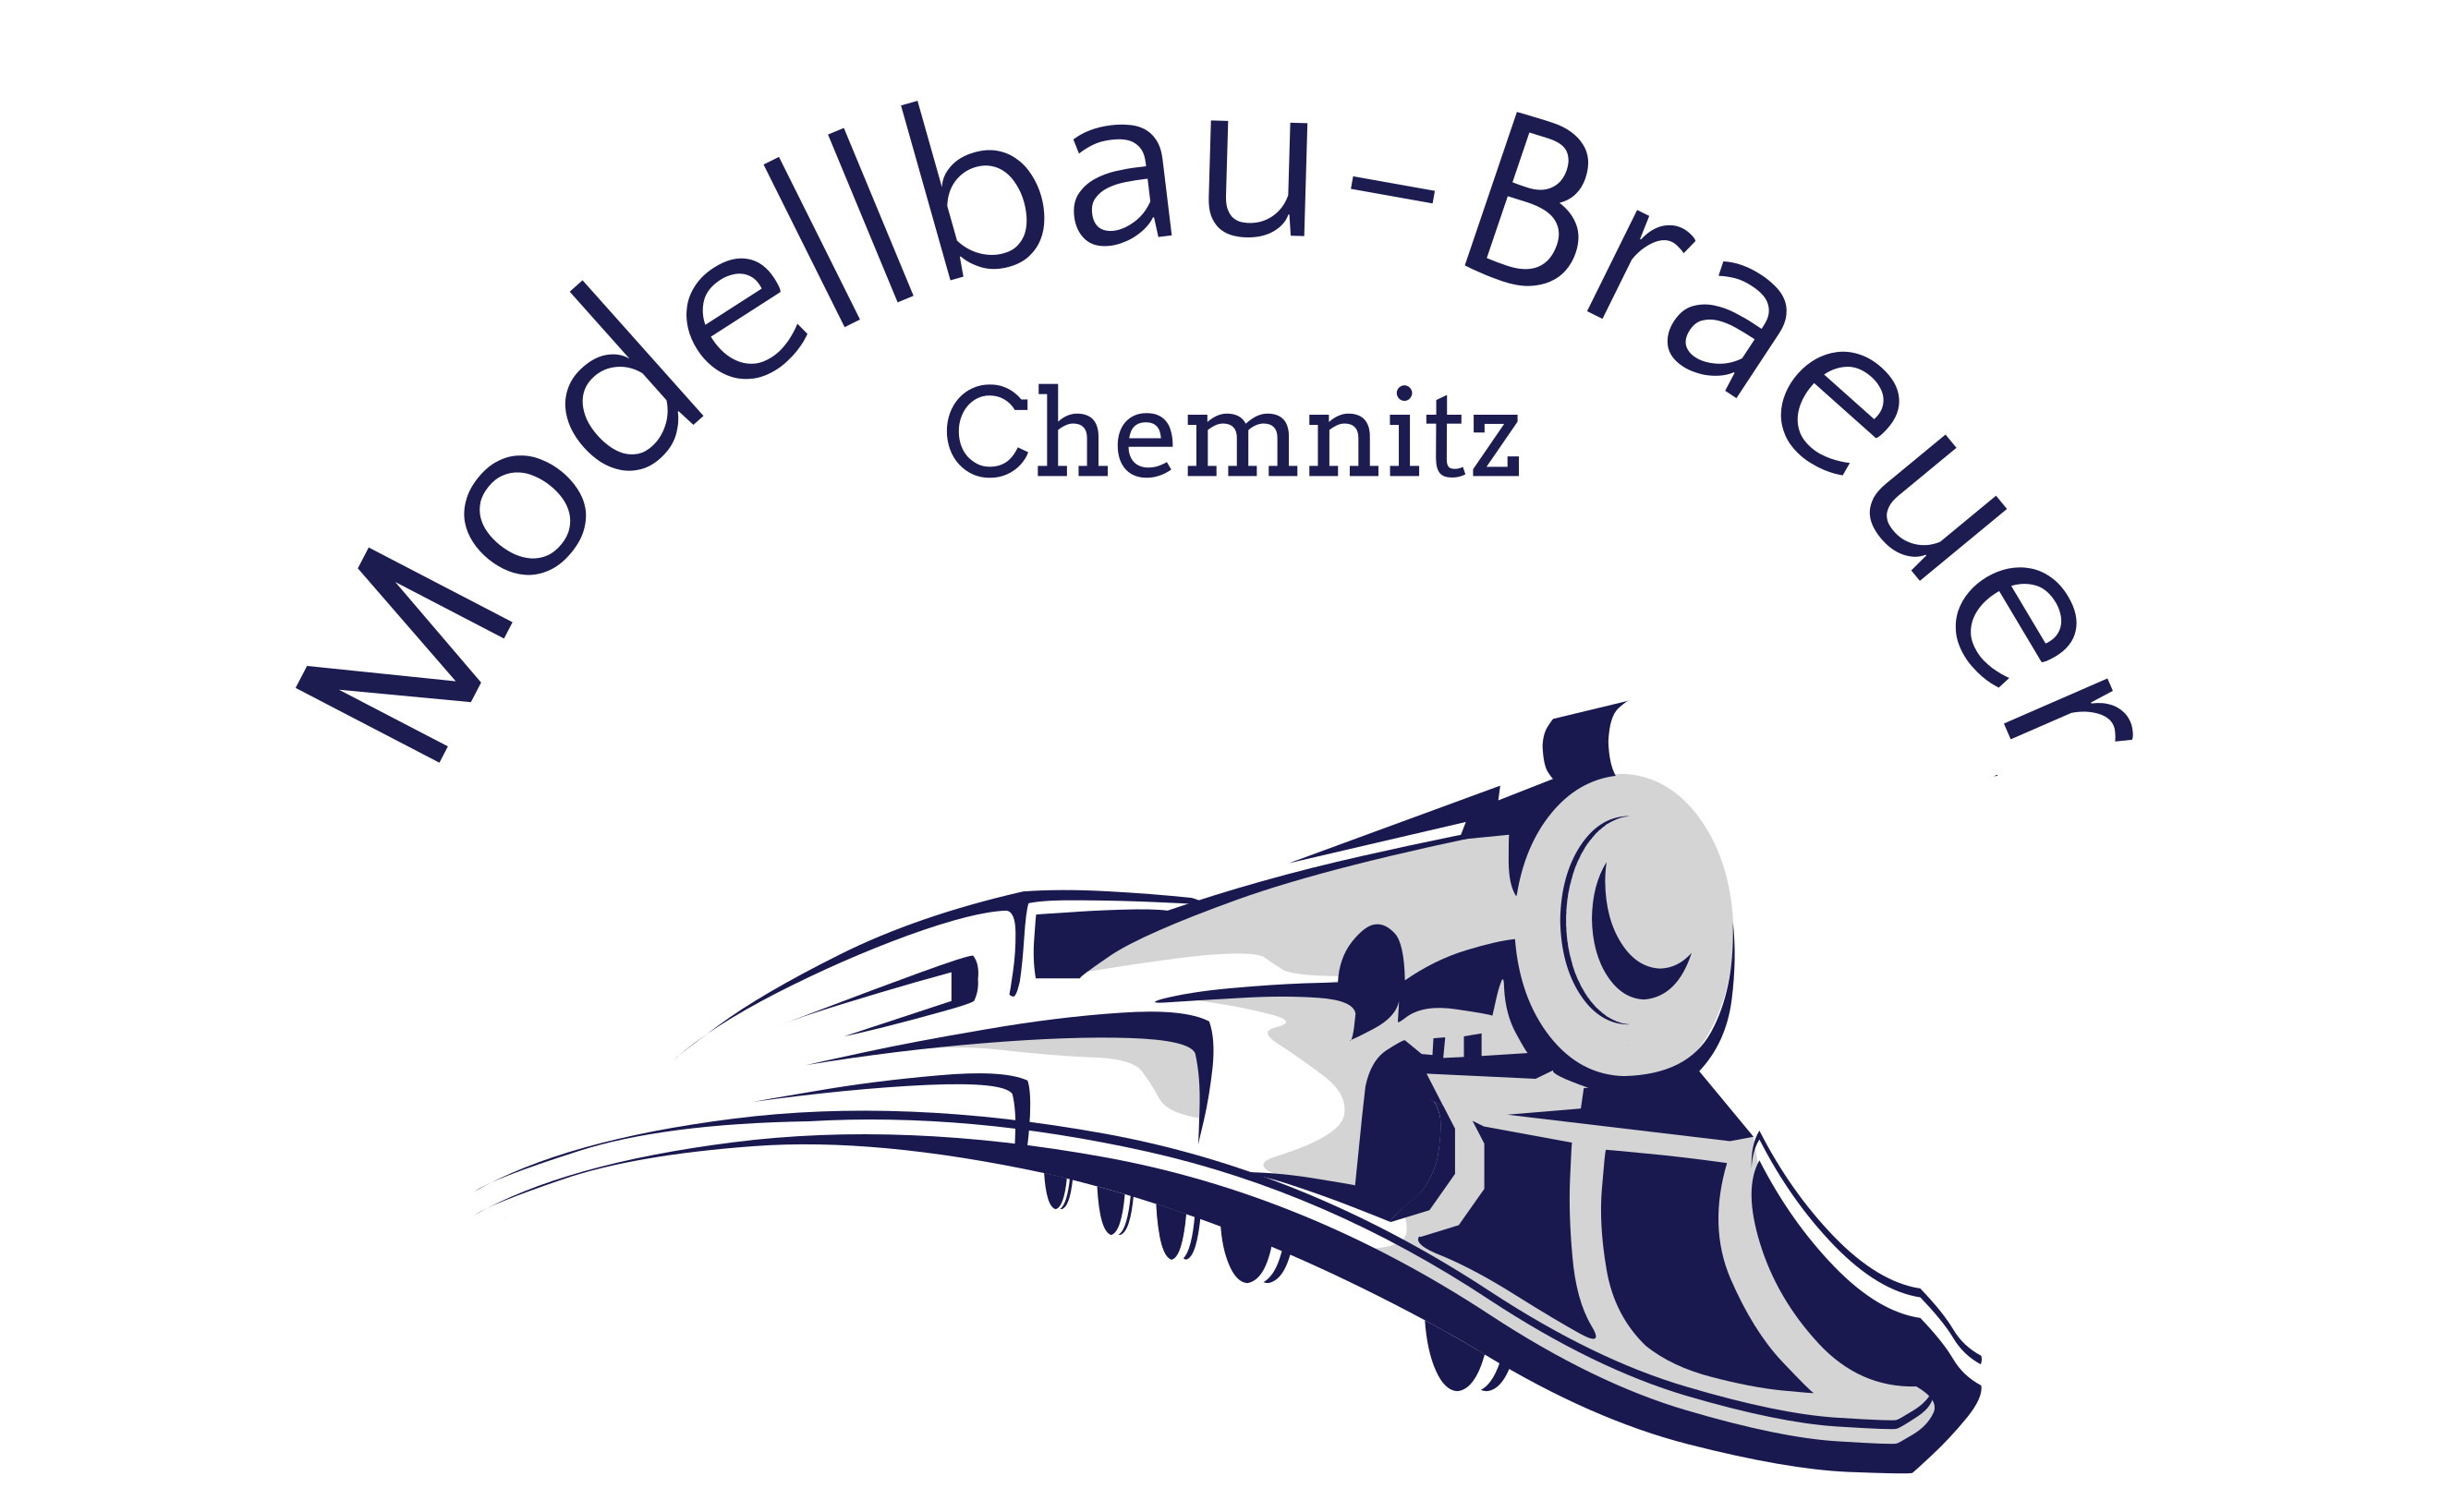 Modellbau-Bräuer